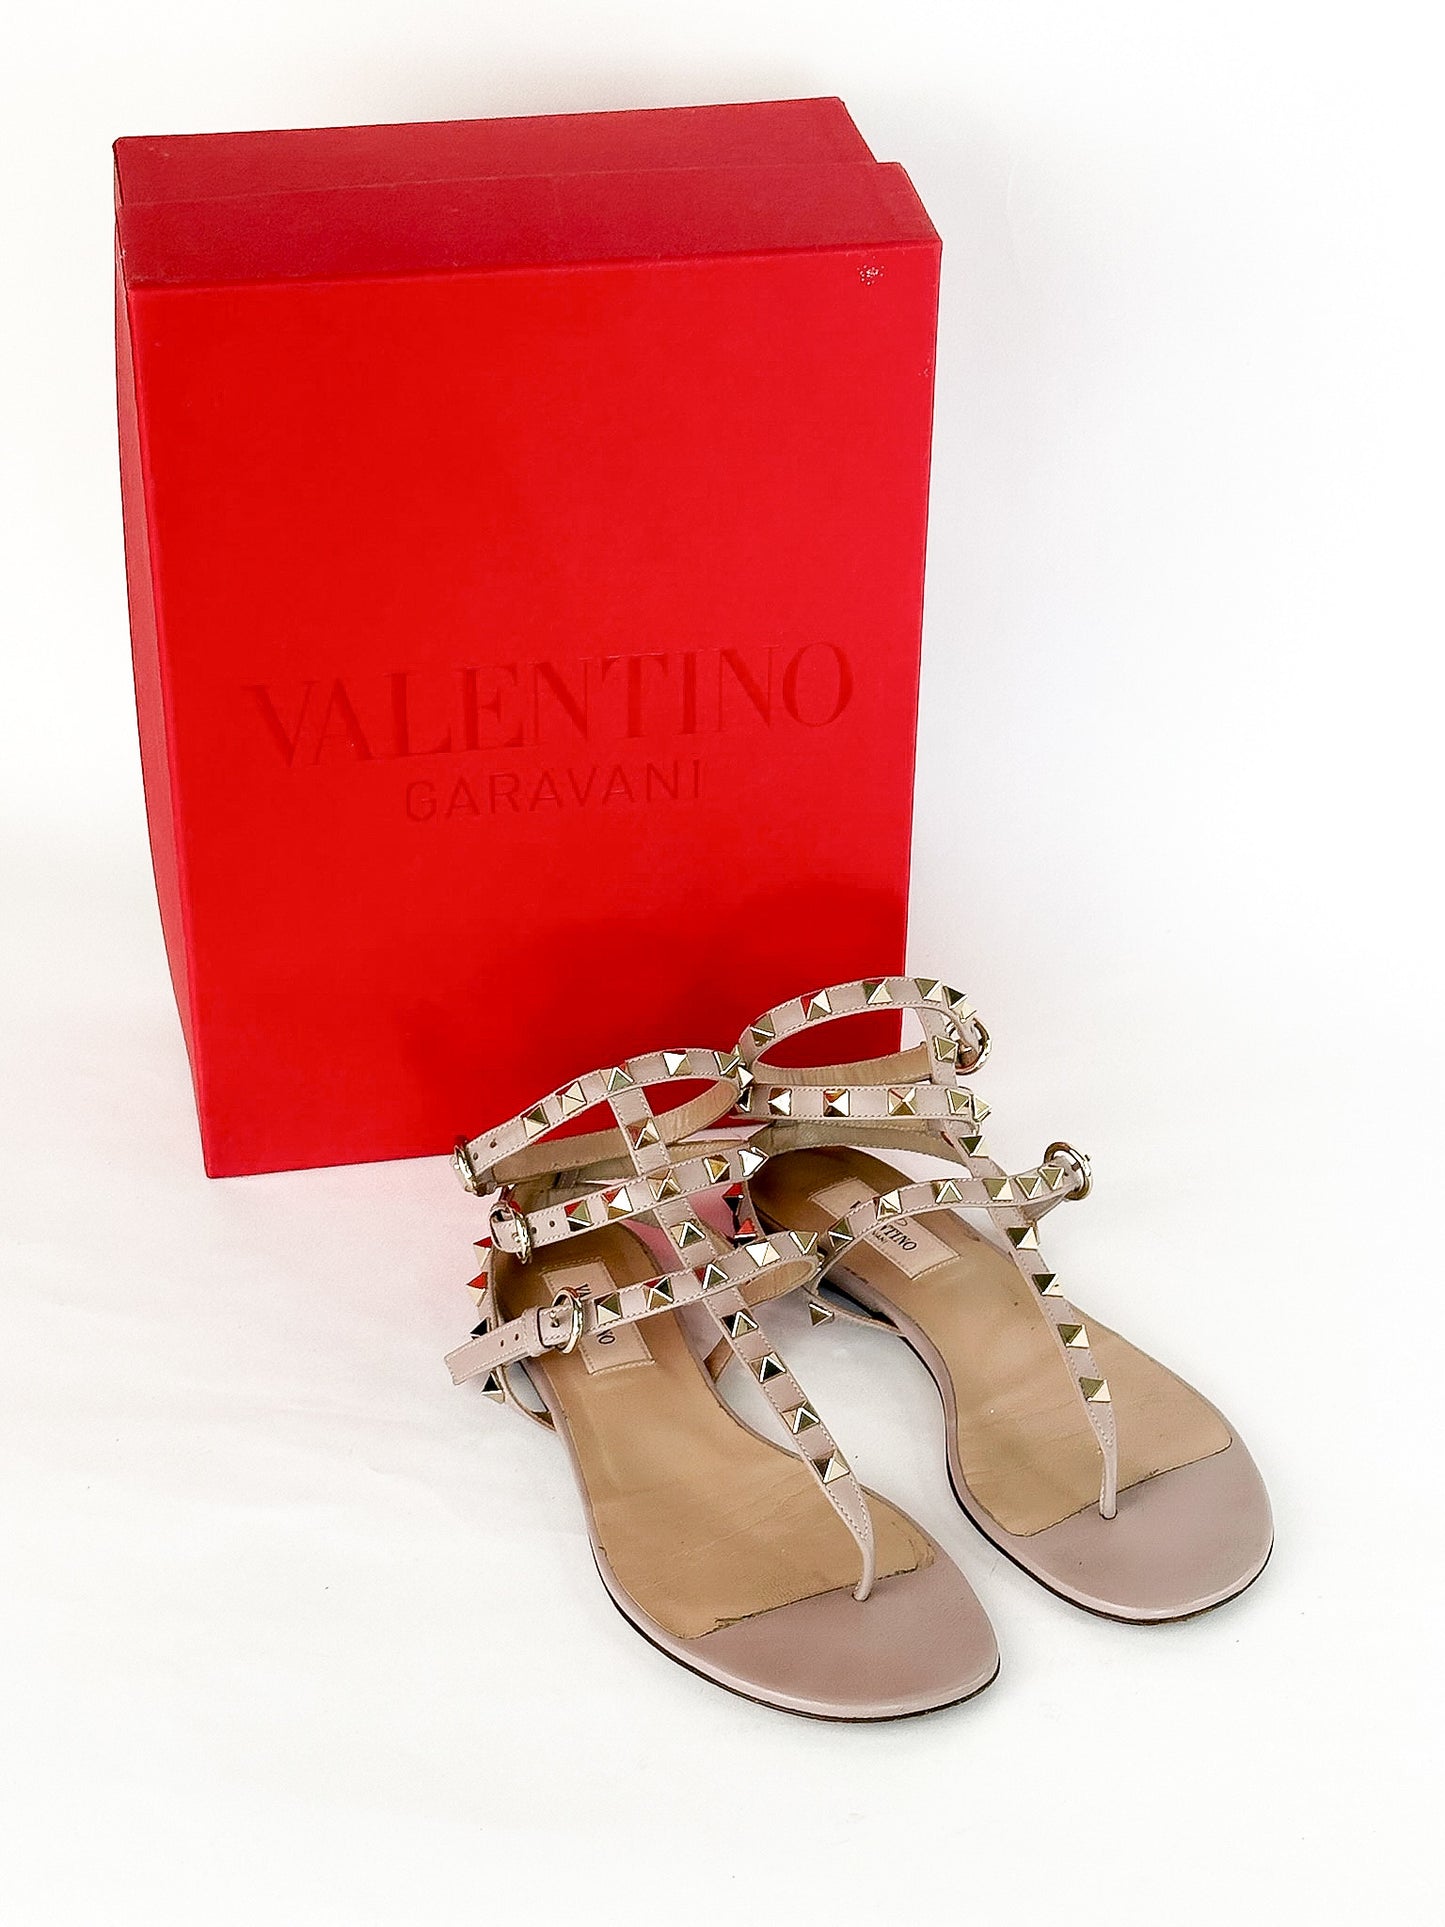 Valentino Garavani Rockstud Flip Flop Sandal In Calfskin Leather Size 36